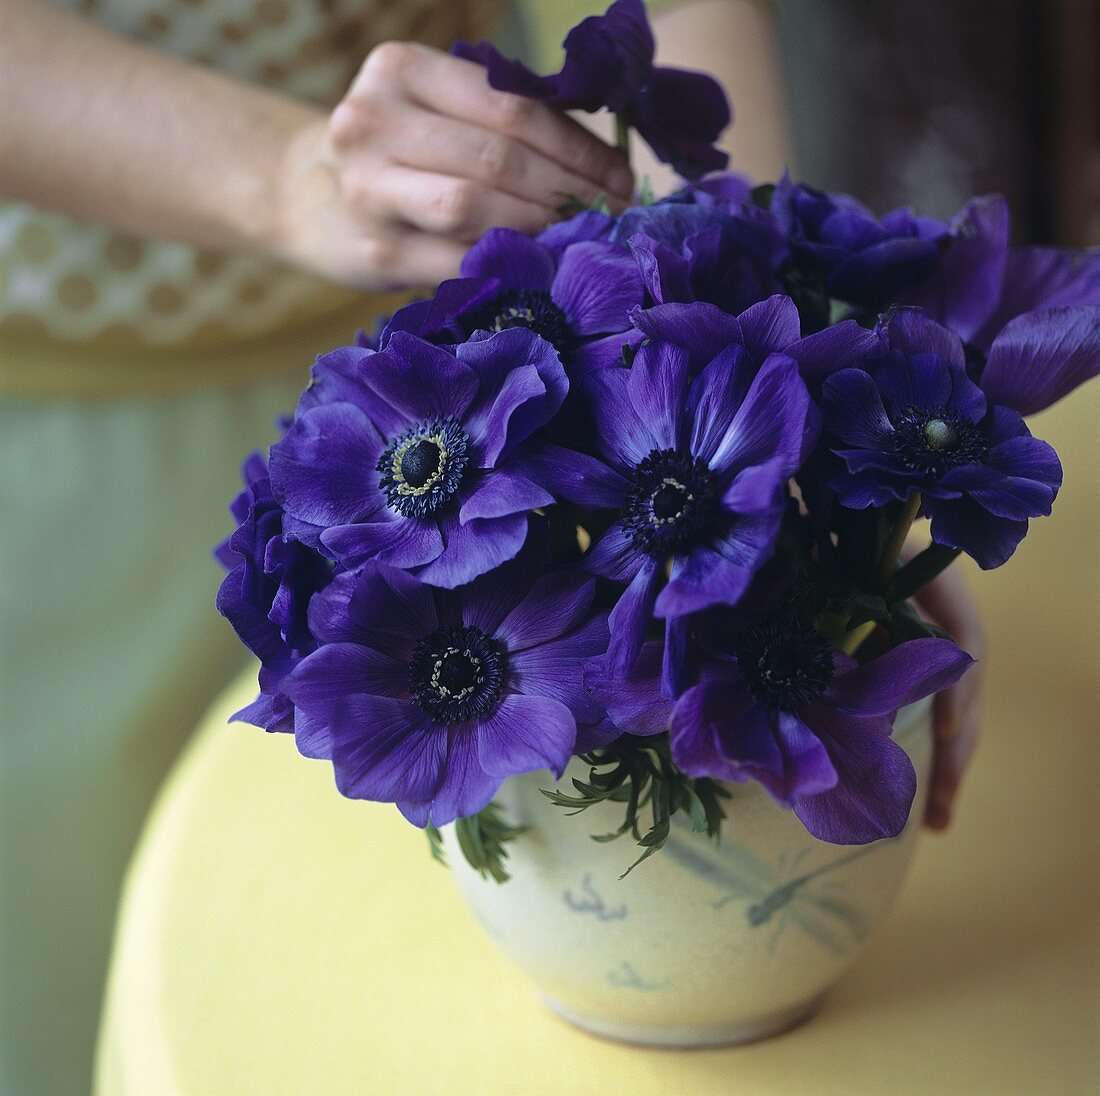 Woman putting purple anemones into a vase